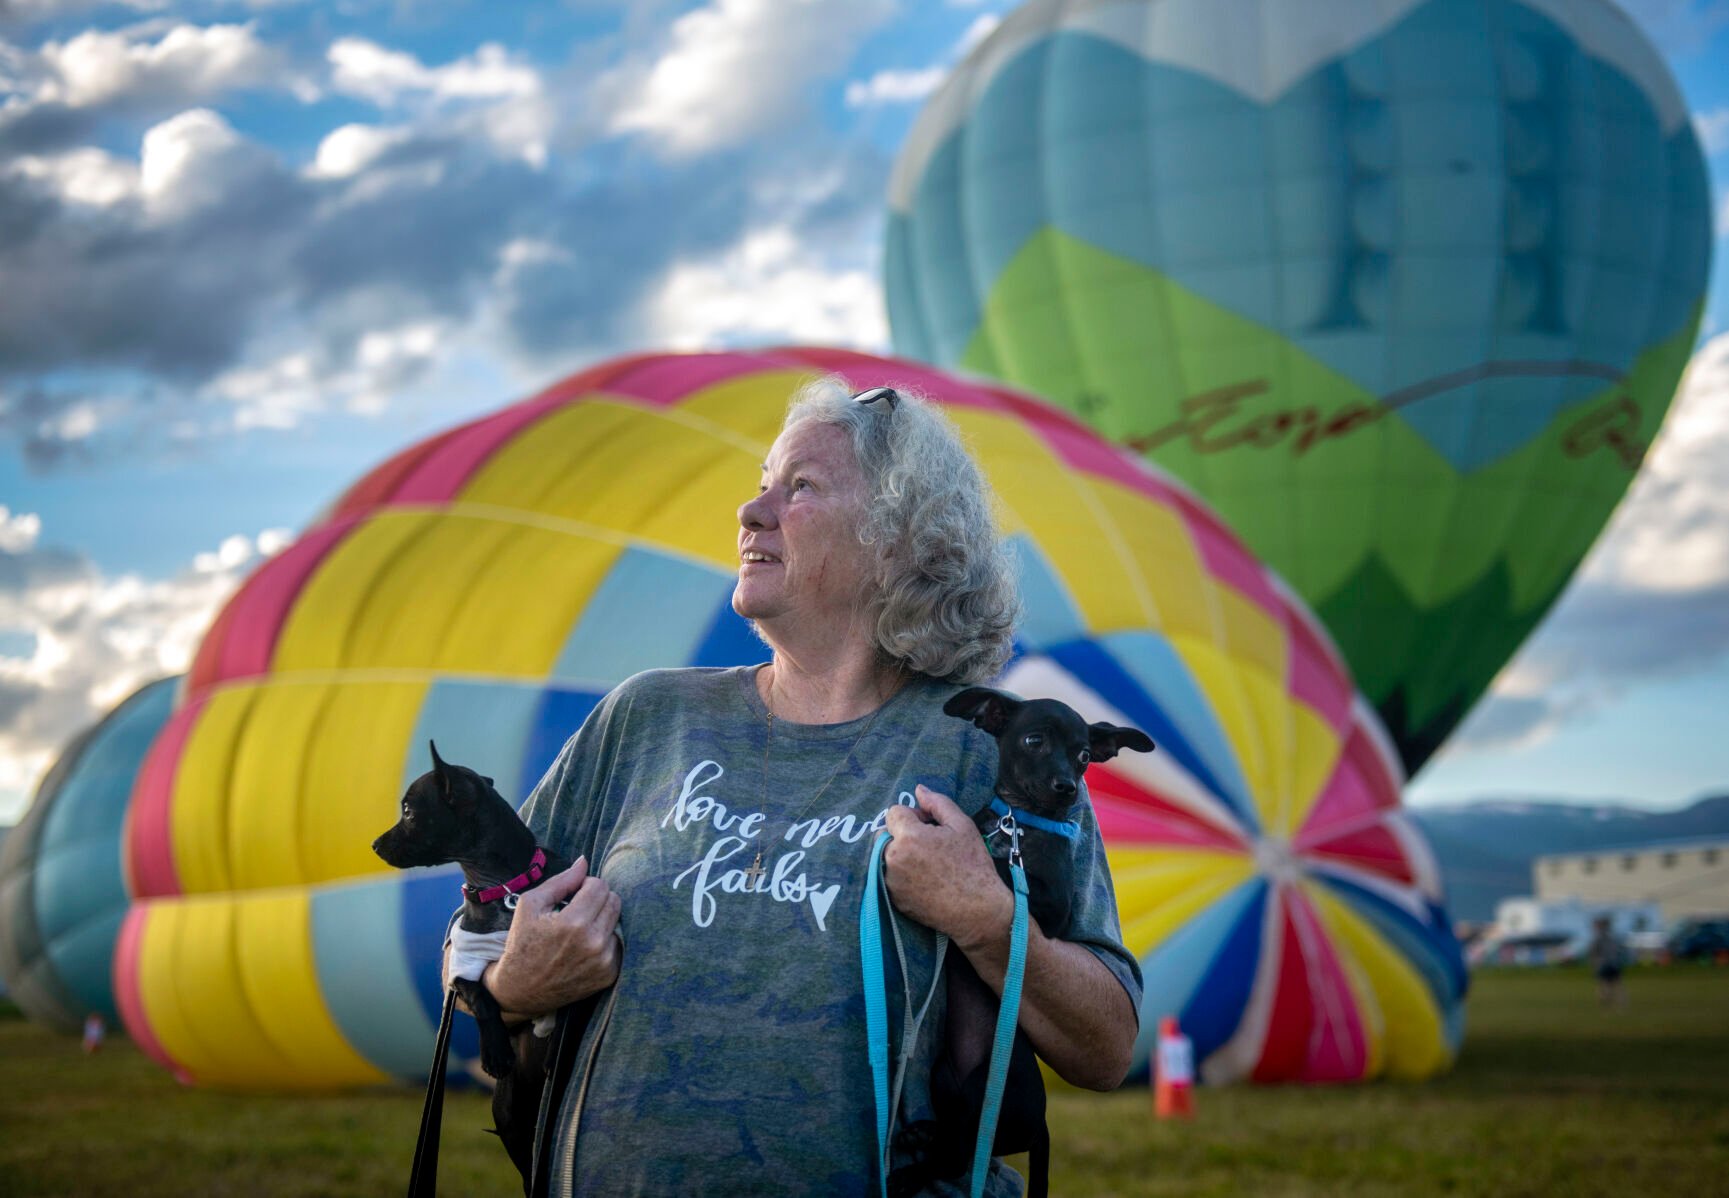 Annual balloon rally enchants Teton Valley | Sports Features